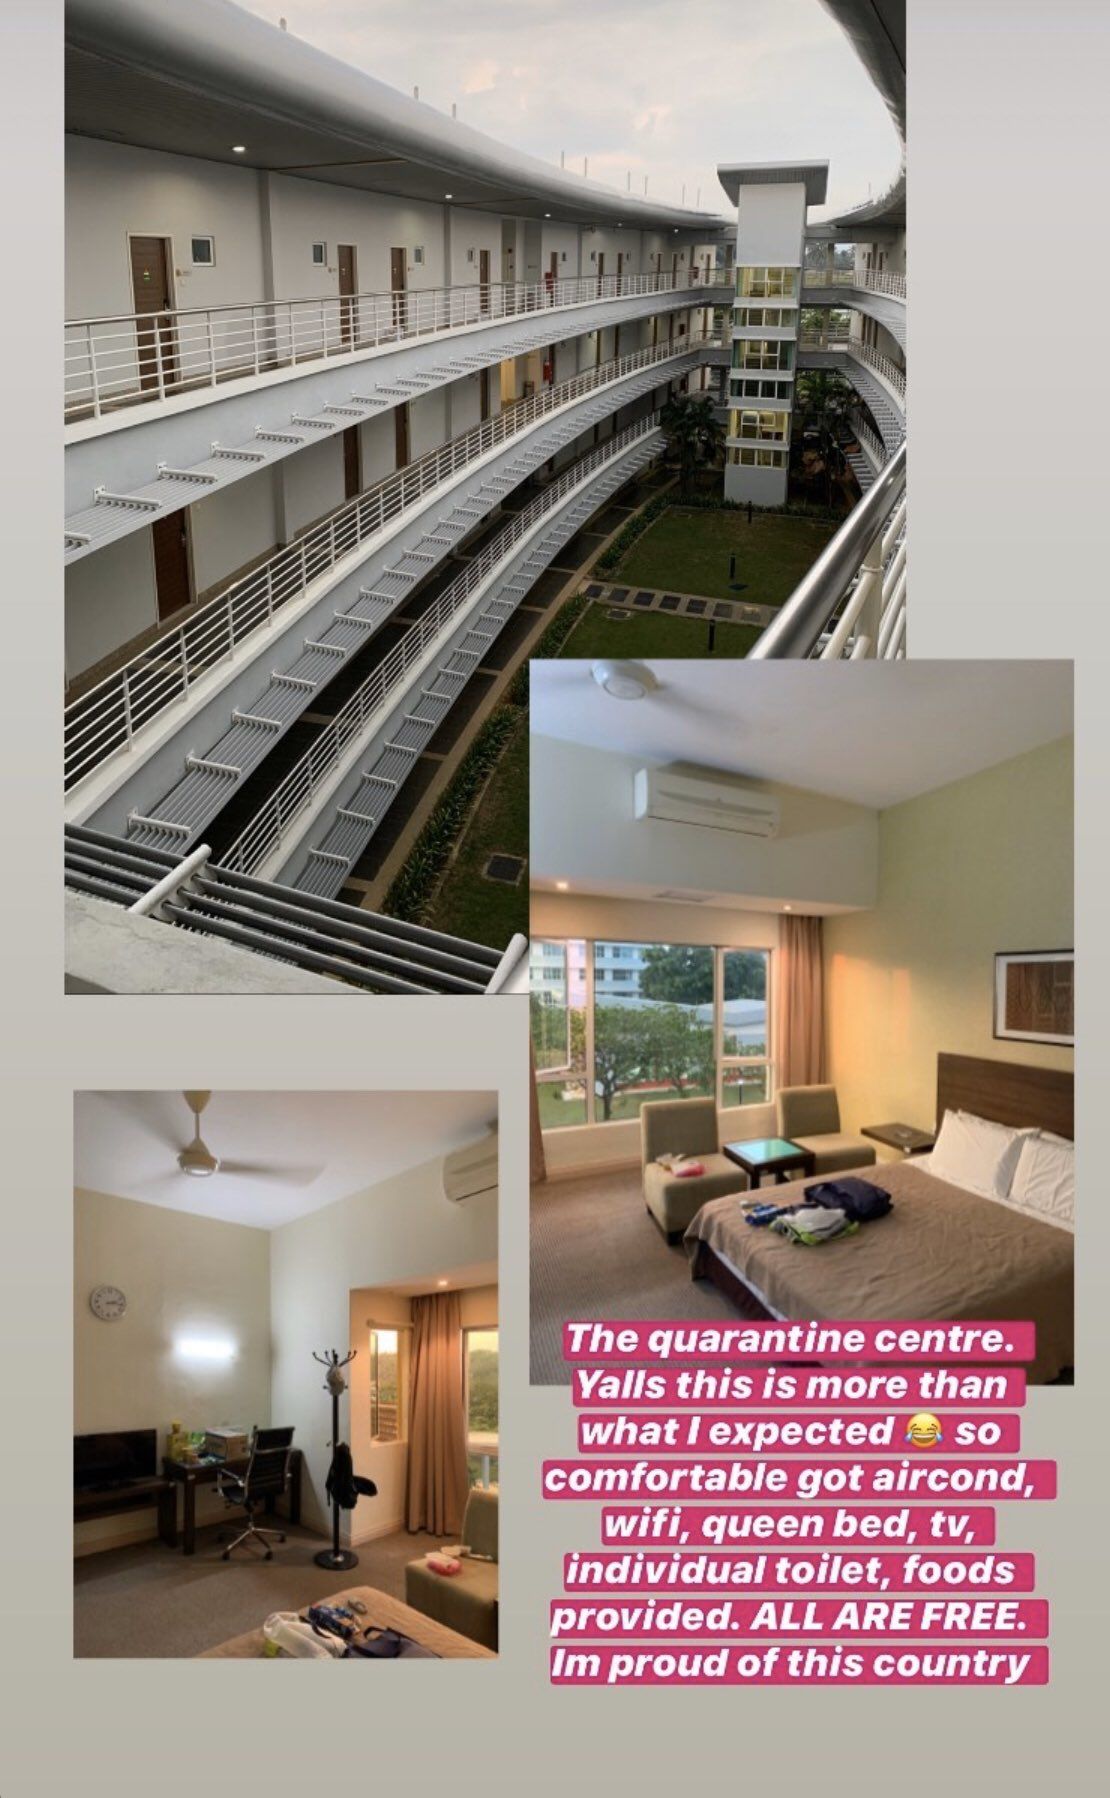 Covid-19 quarantine hotel list malaysia